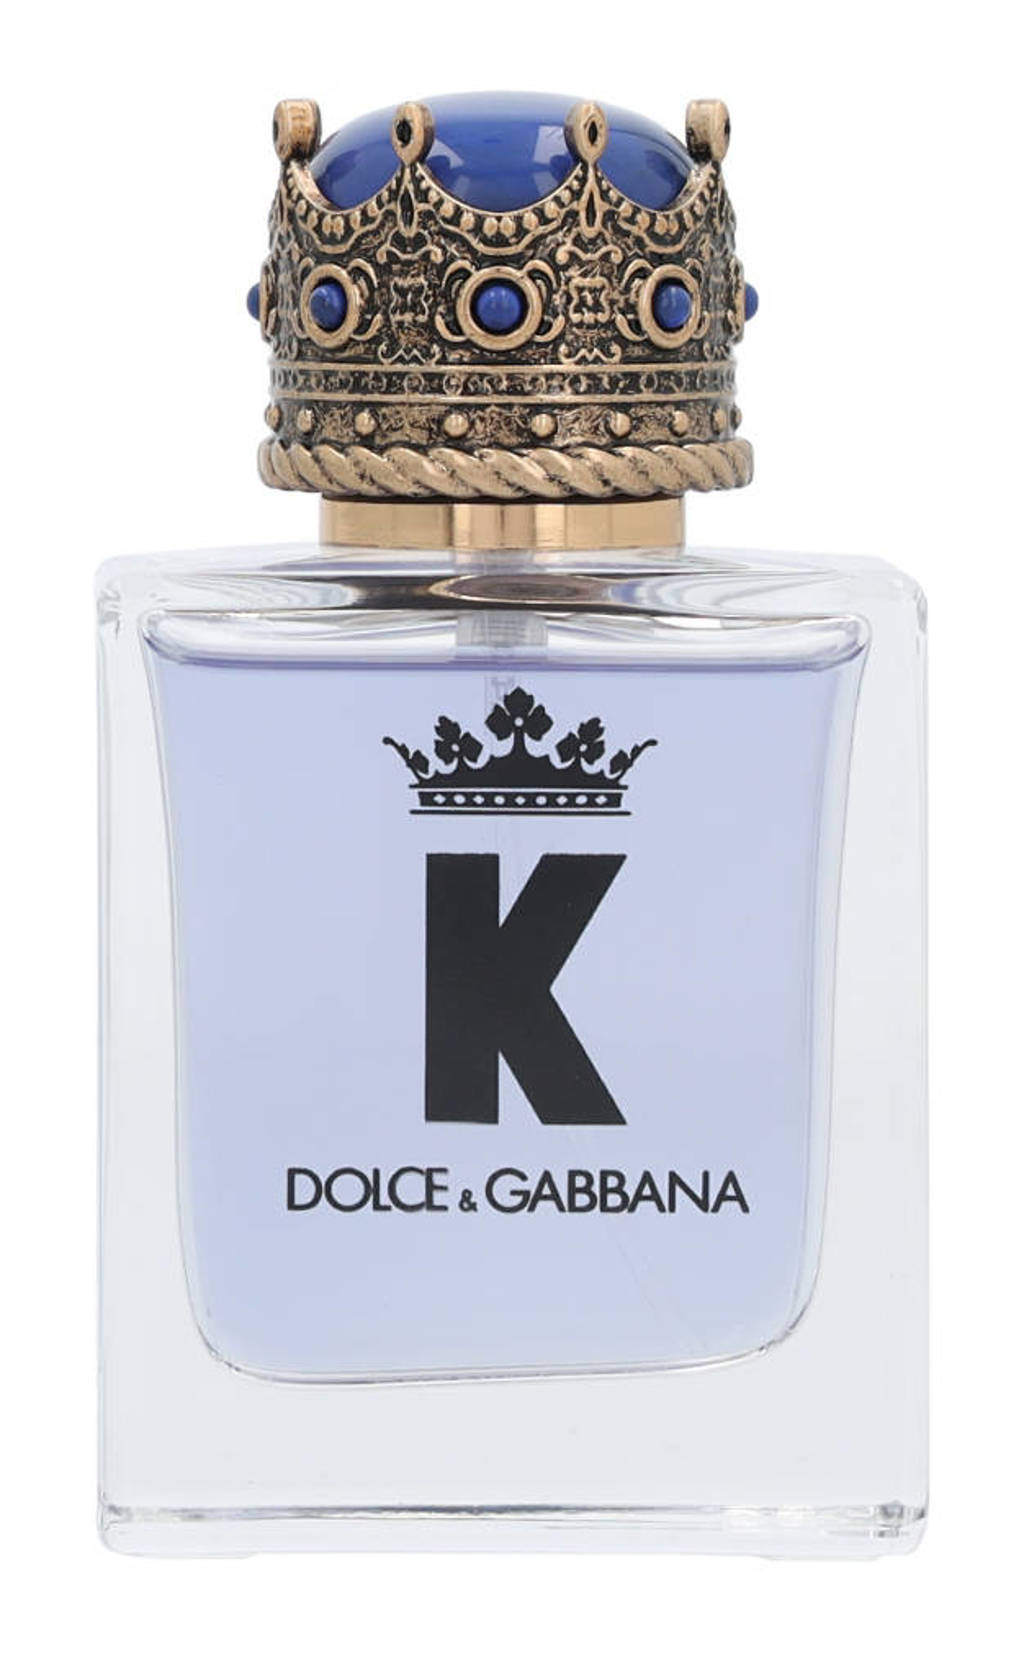 Dolce & Gabbana K eau de toilette - 50 ml